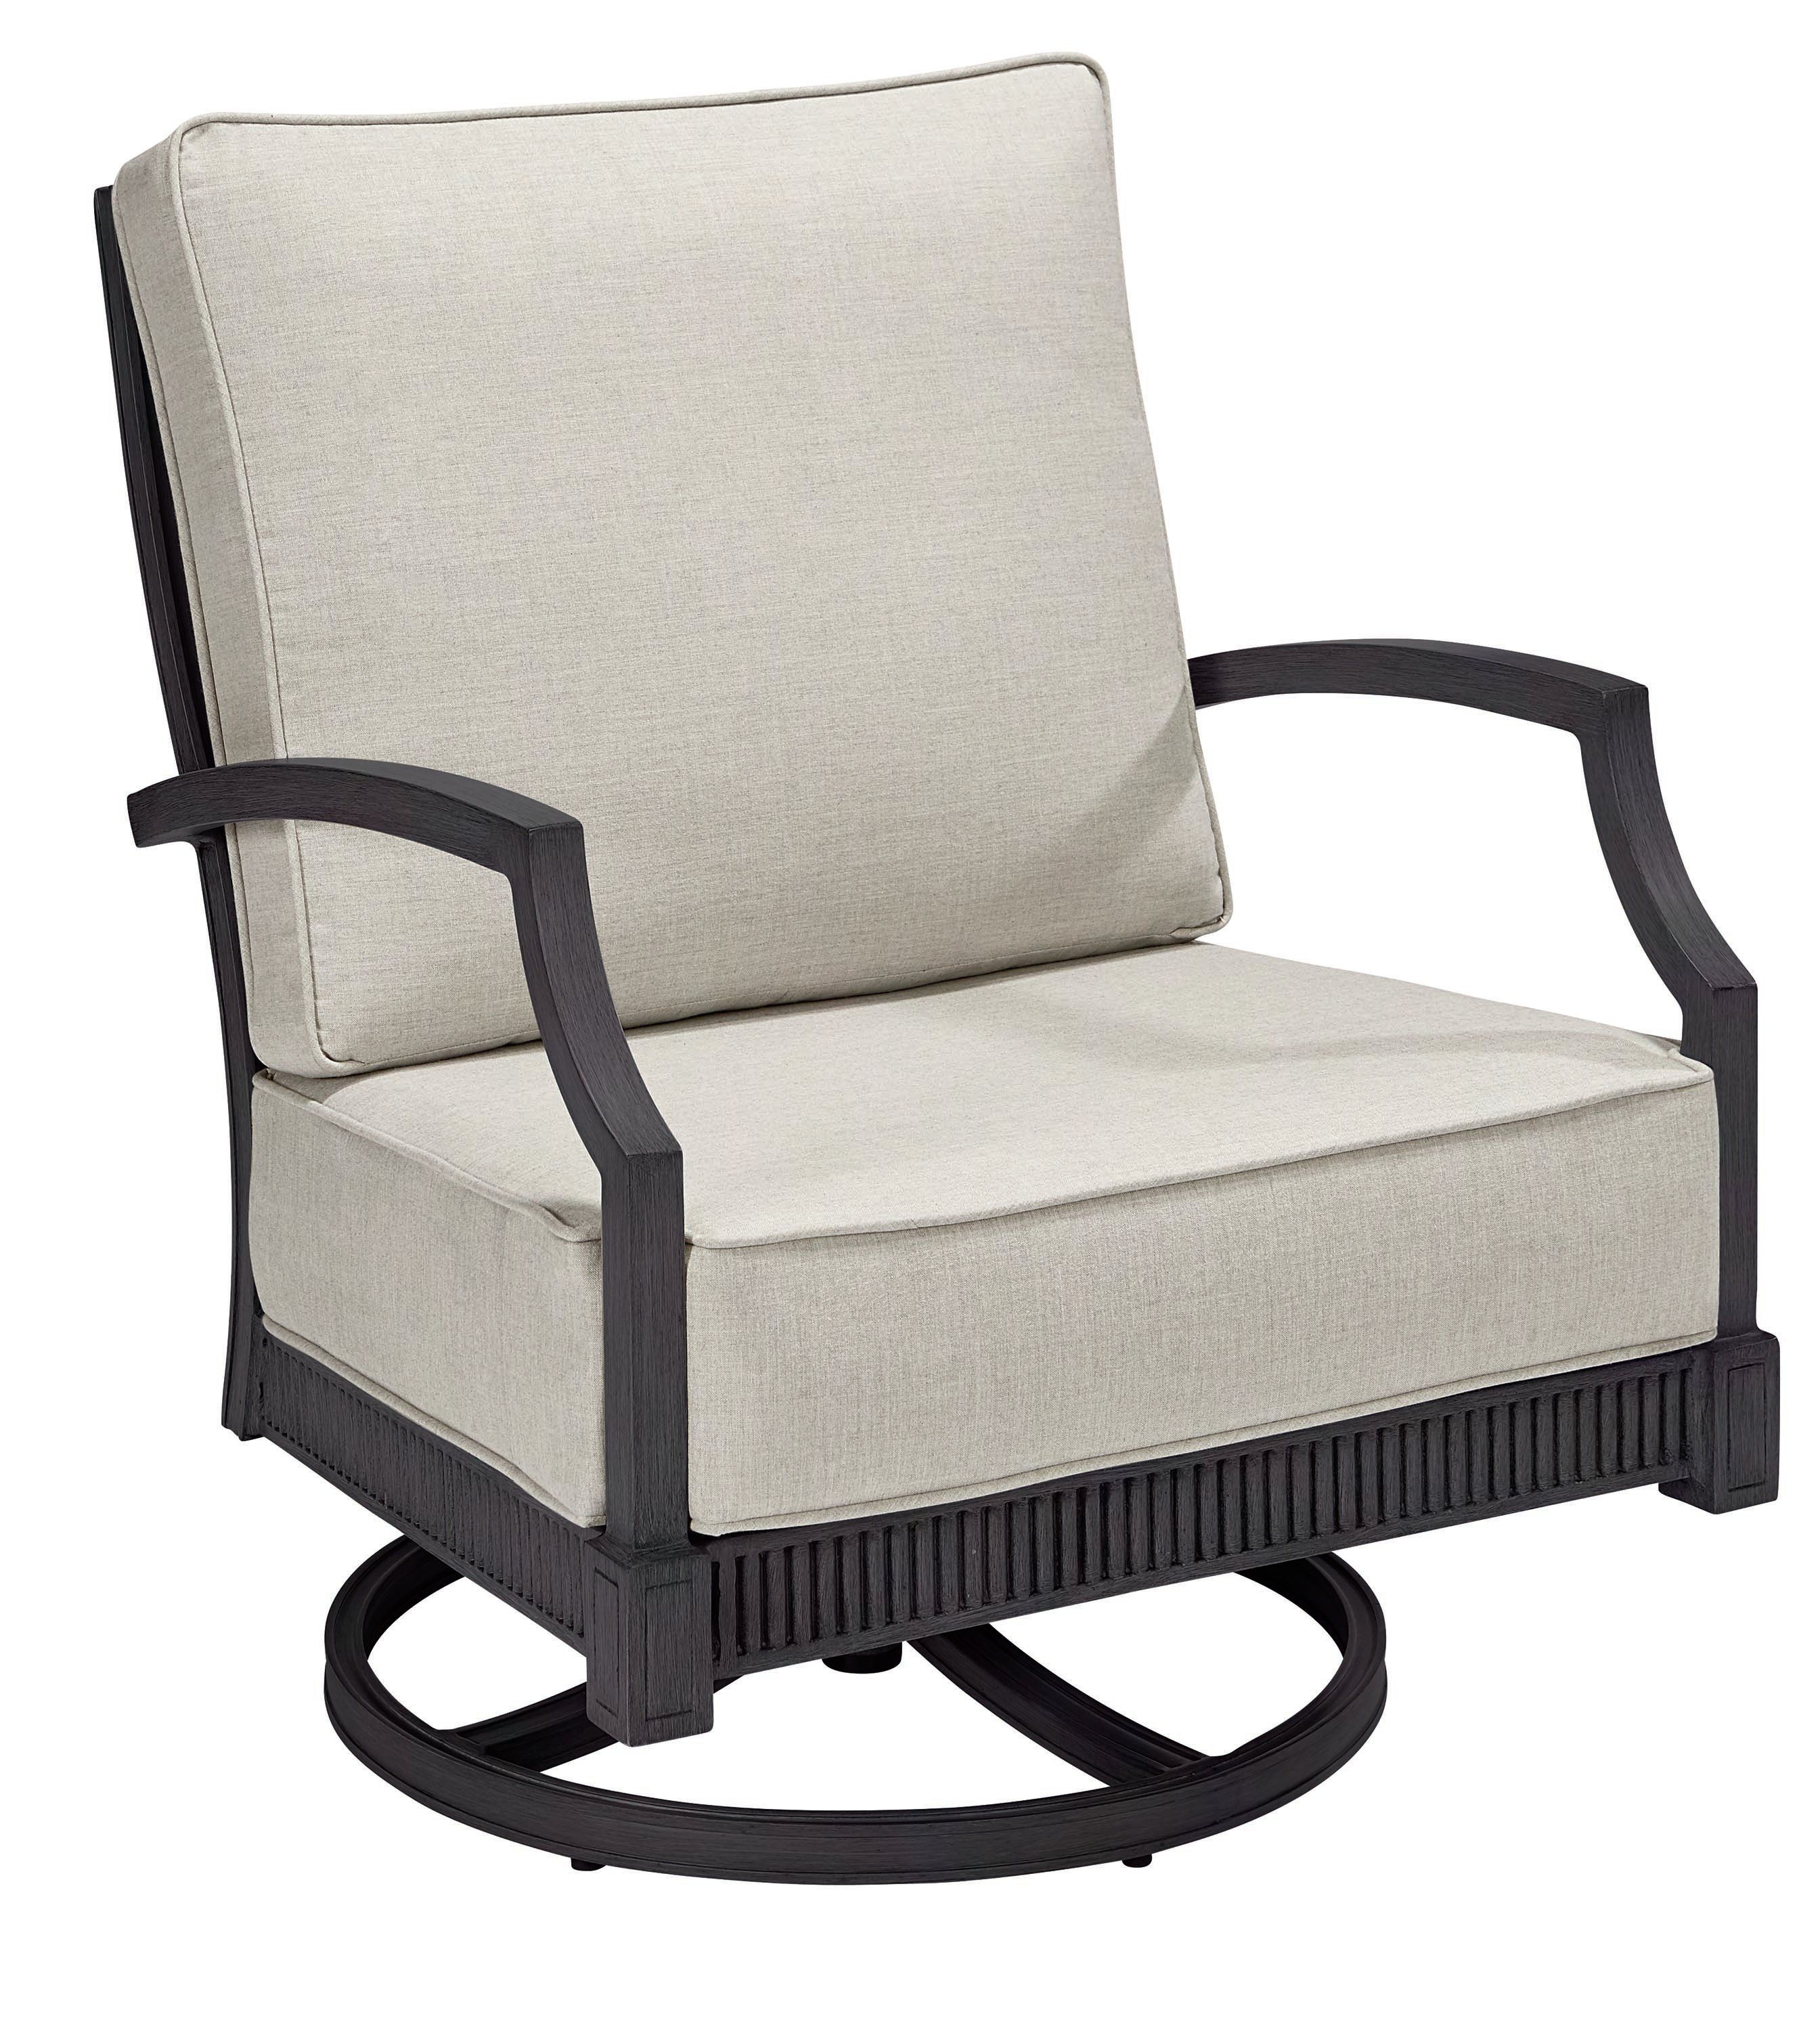 Euston Rocking Chair With Cushions | Joss & Main Regarding Rocking Chairs With Cushions (View 11 of 15)